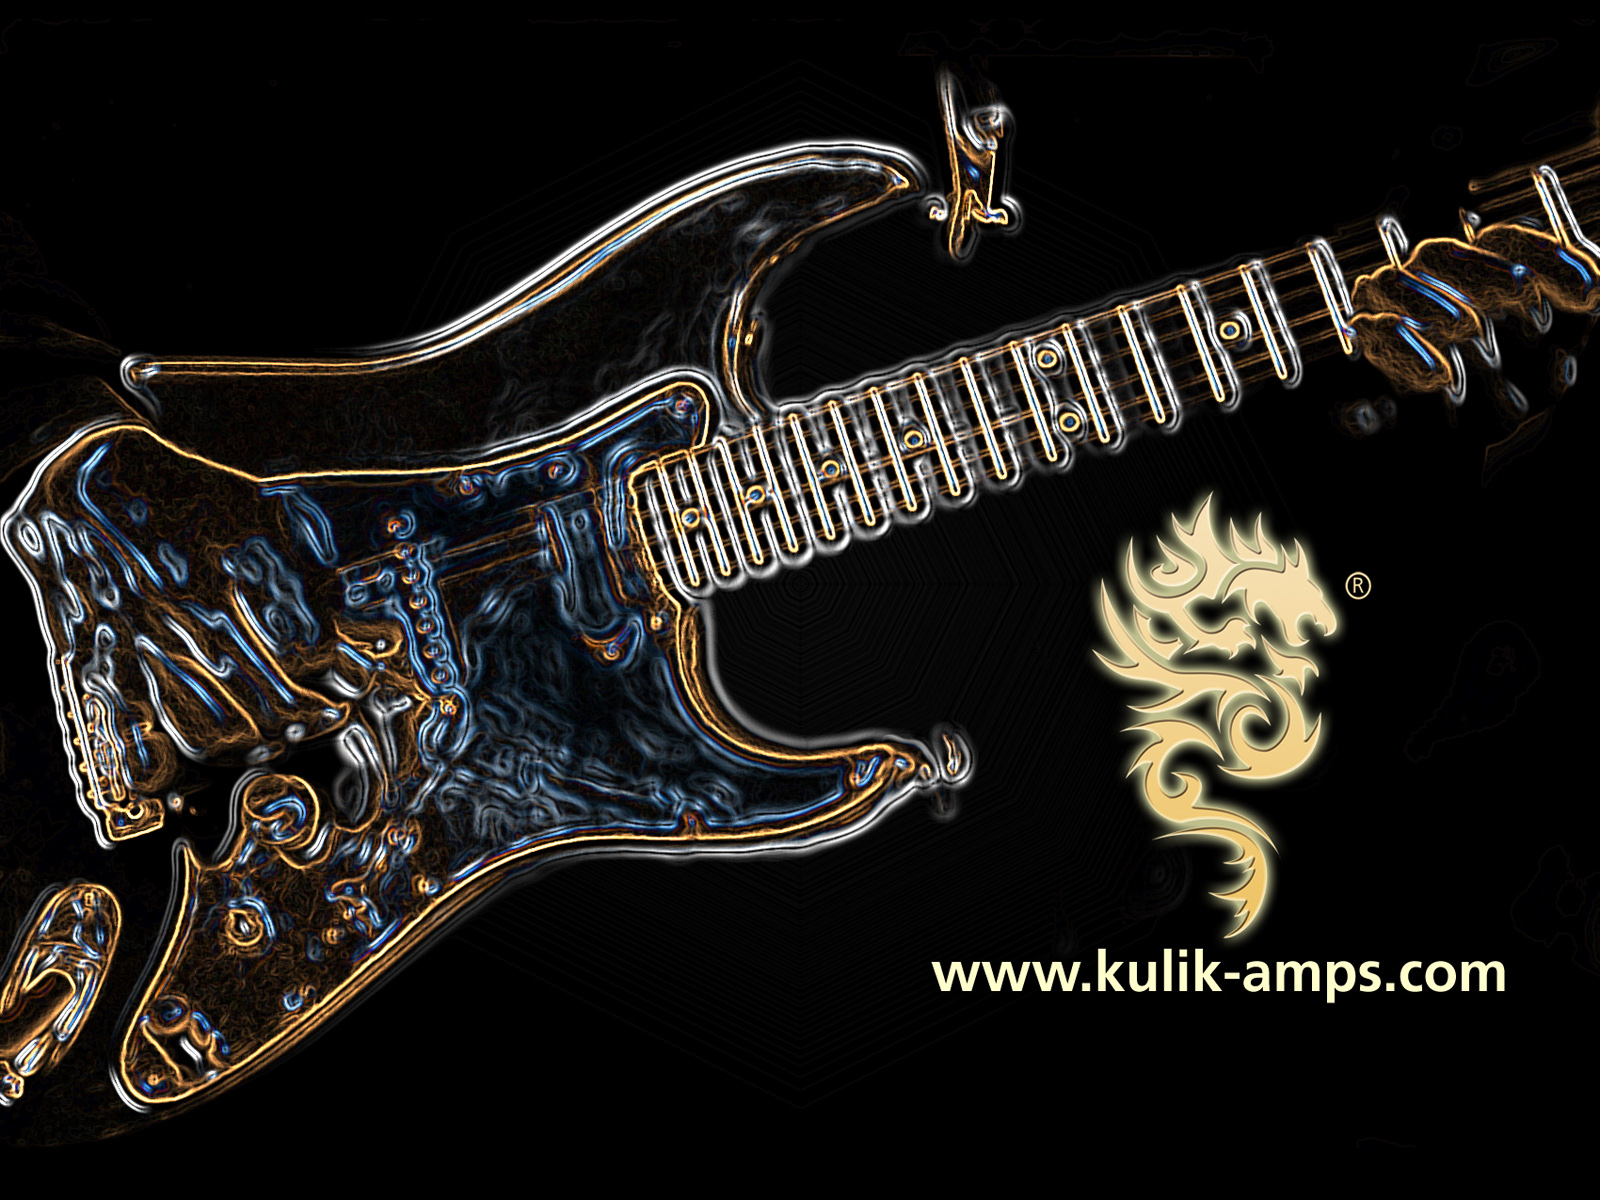 Kulik Amplification Design Wallpaper